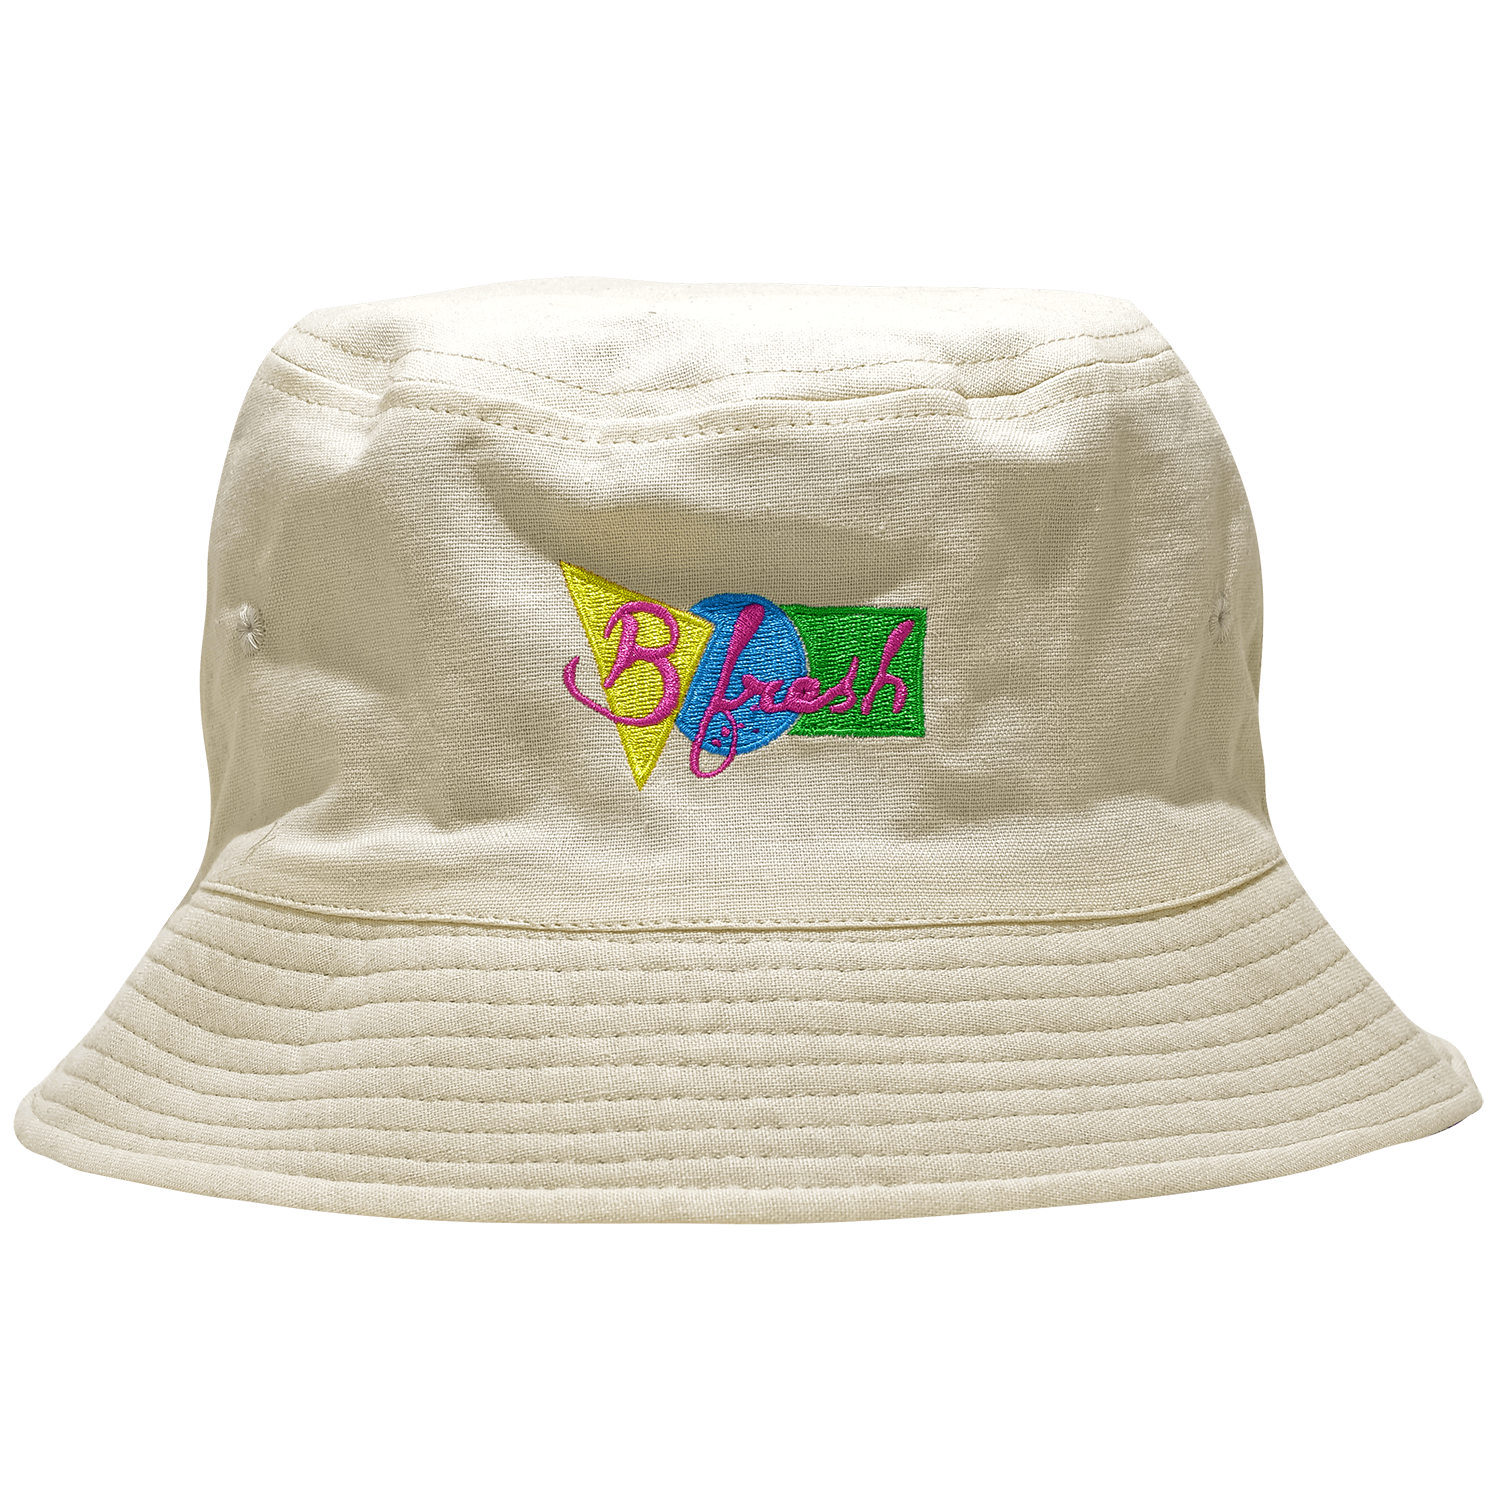 Beach Bum Retro Summer 80s California Florida Tropical Palm Tree Ocean Yellow Blue Pink Reversible Bucket Hat. B Fresh Gear.